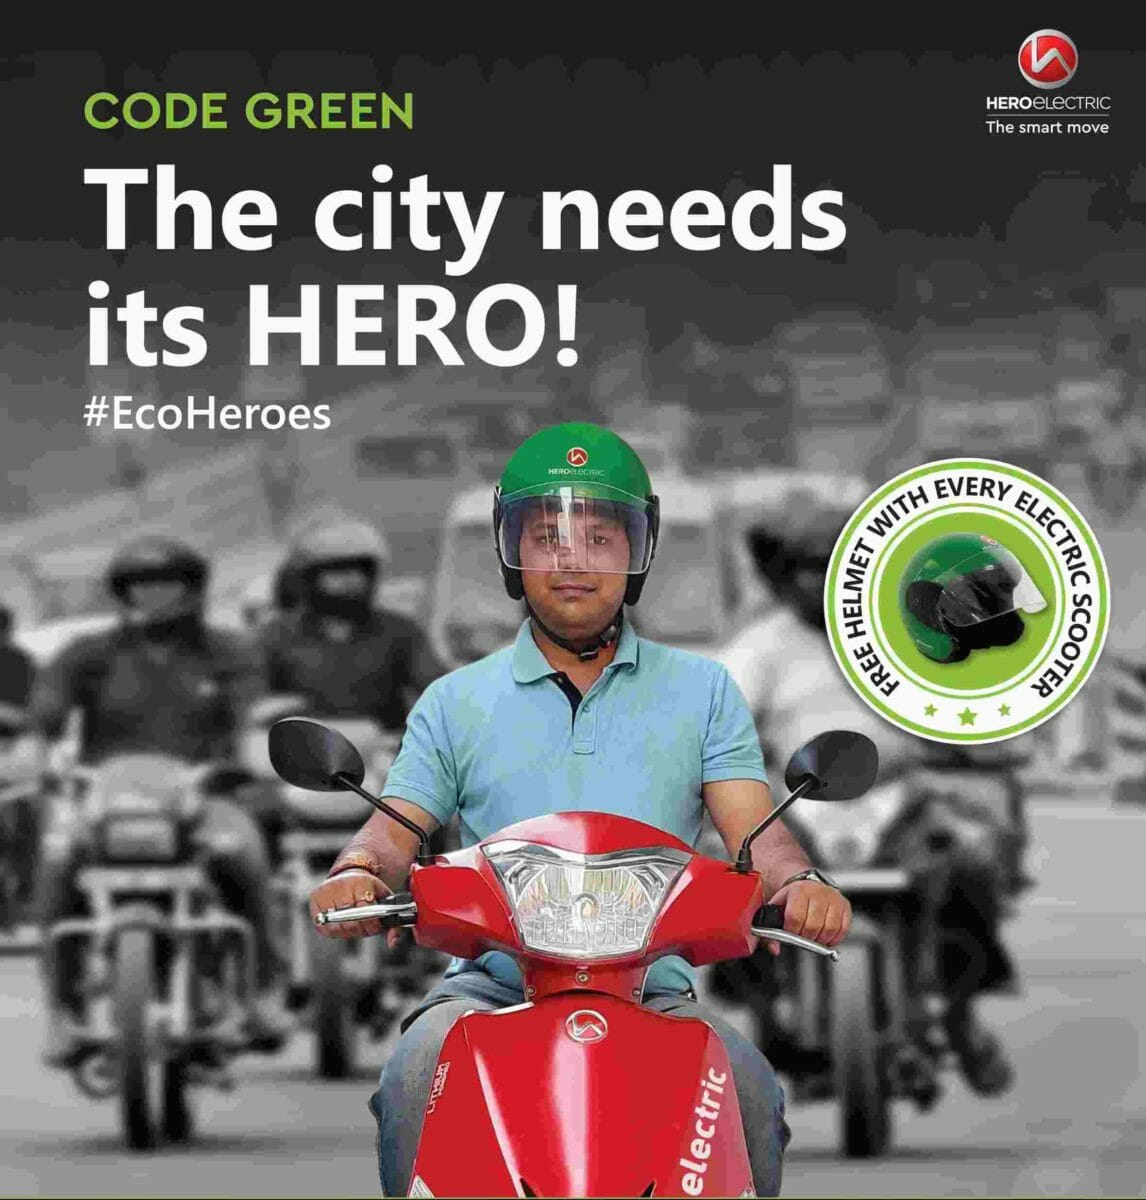 Code Green Hero Electric